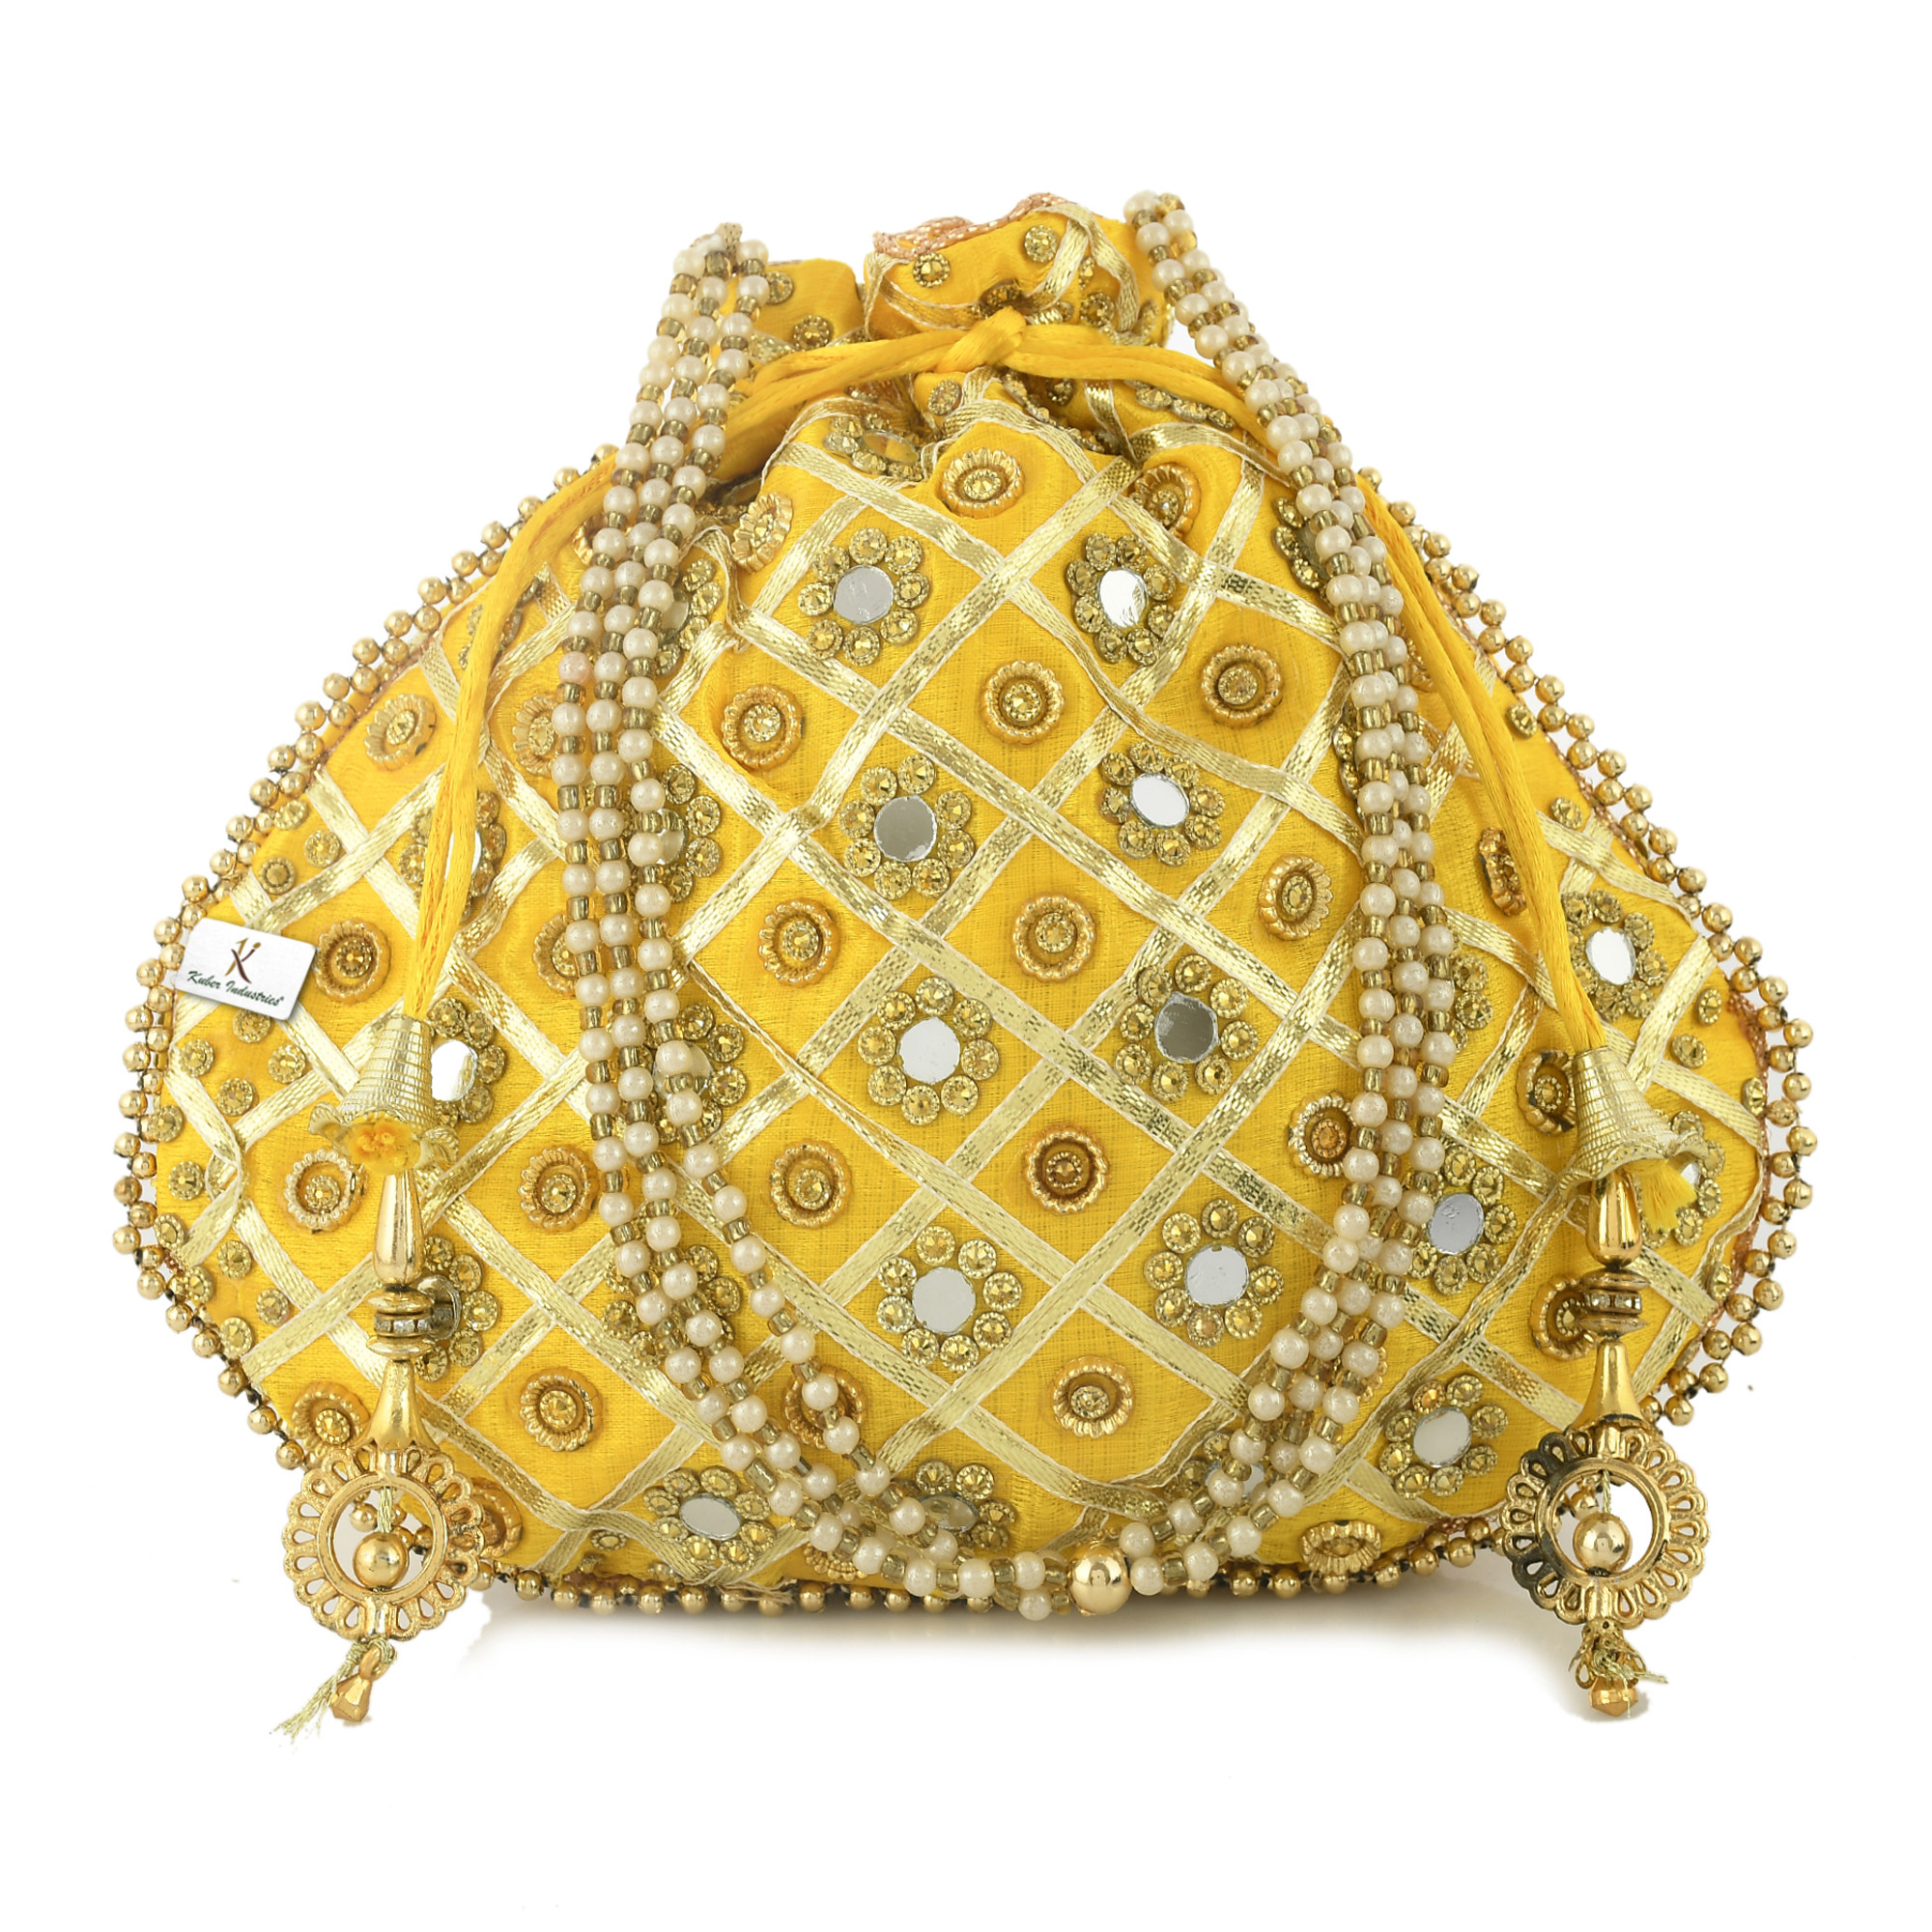 Kuber Industries 2 Pieces Silk Traditional Mirror Work Clutch Potli Batwa Pouch Hand Bag For Women/Girls (Gold & Pink)-KUBMRT11509